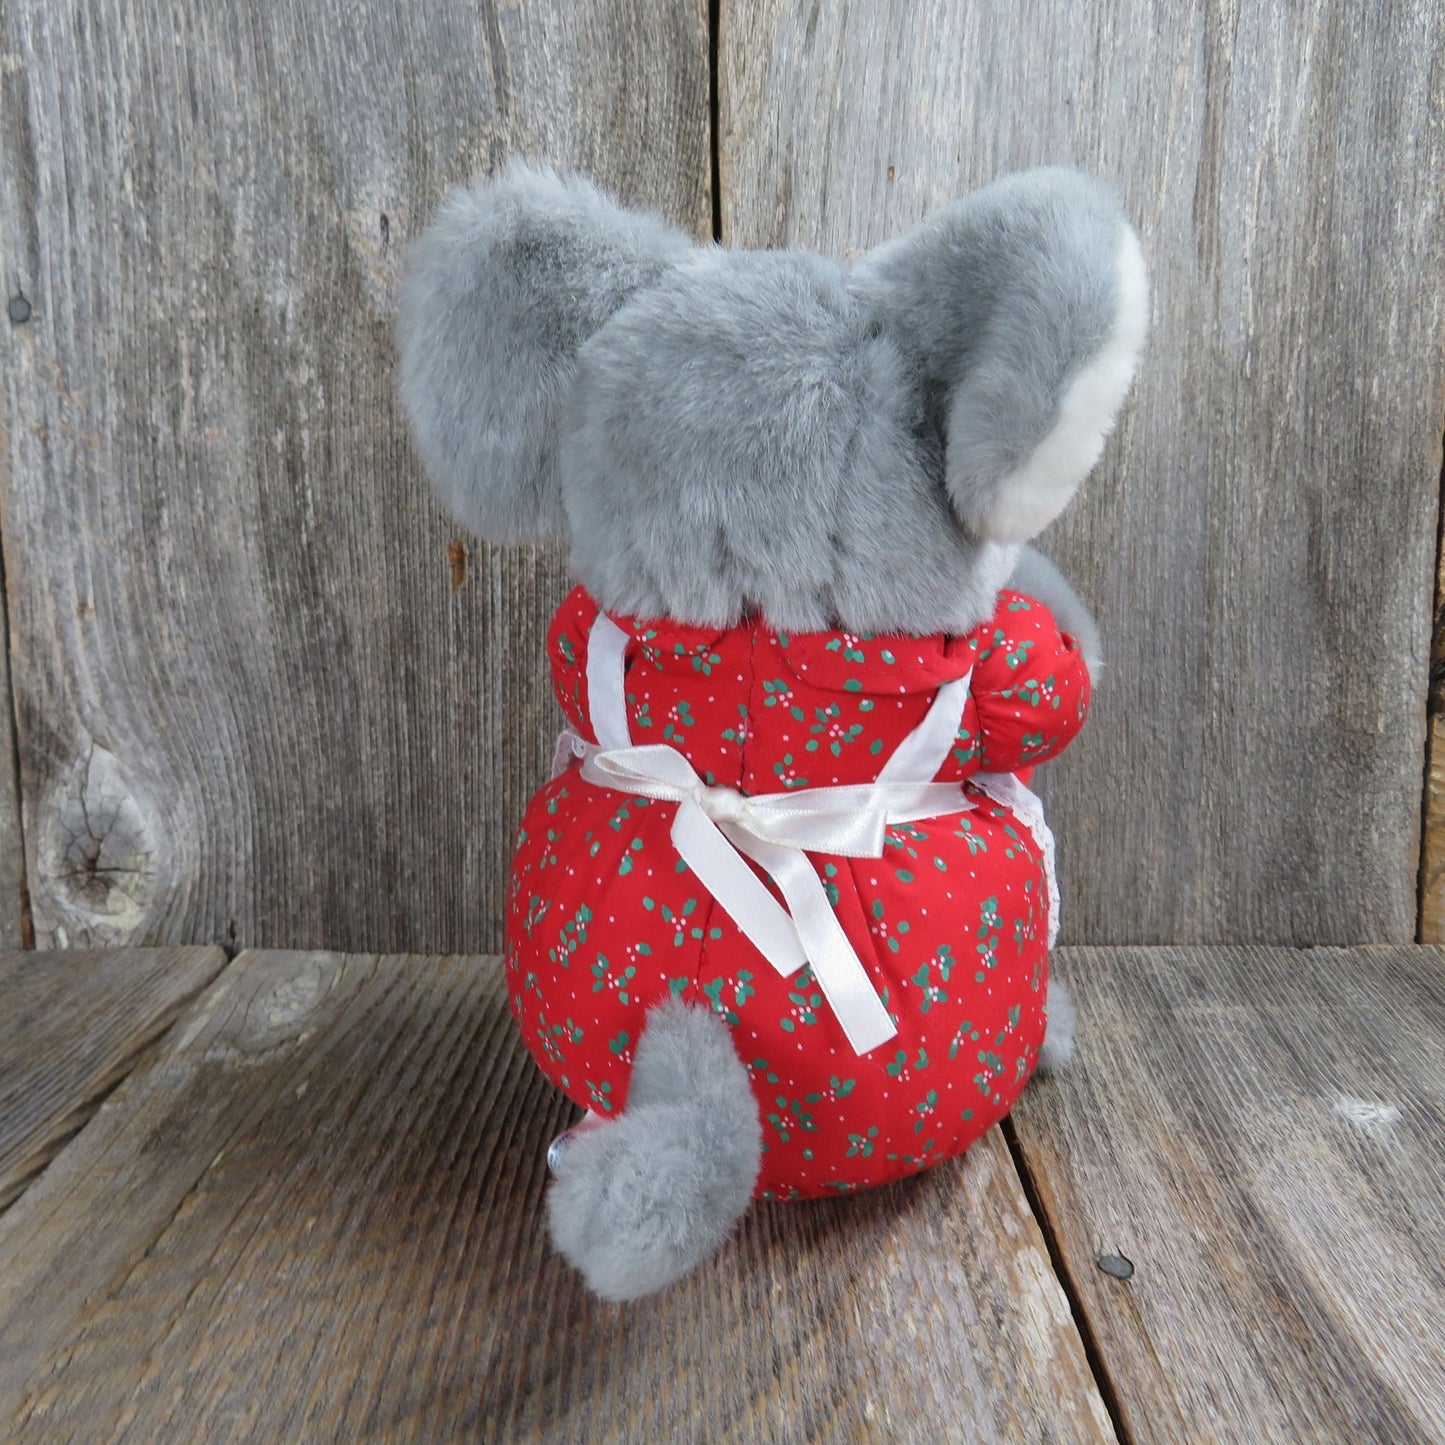 Vintage Christmas Mouse Plush Soft Dreams Puffy Cloth Body Apron Stocking Stuffed Animal